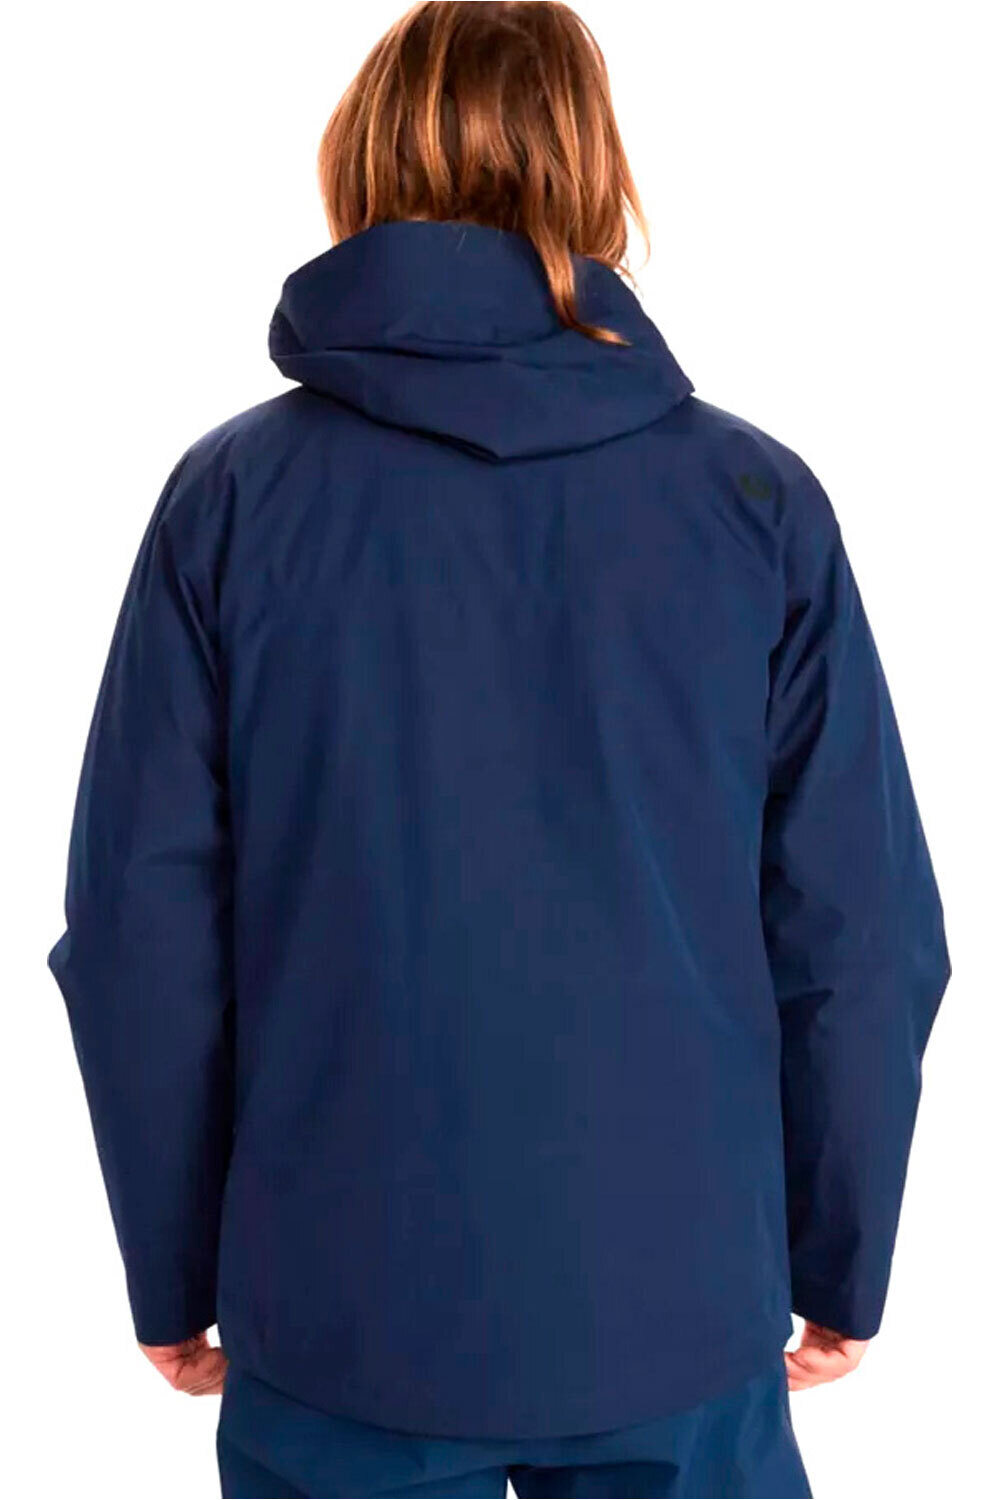 Marmot chaqueta impermeable insulada hombre Minimalist Component Jacket vista trasera